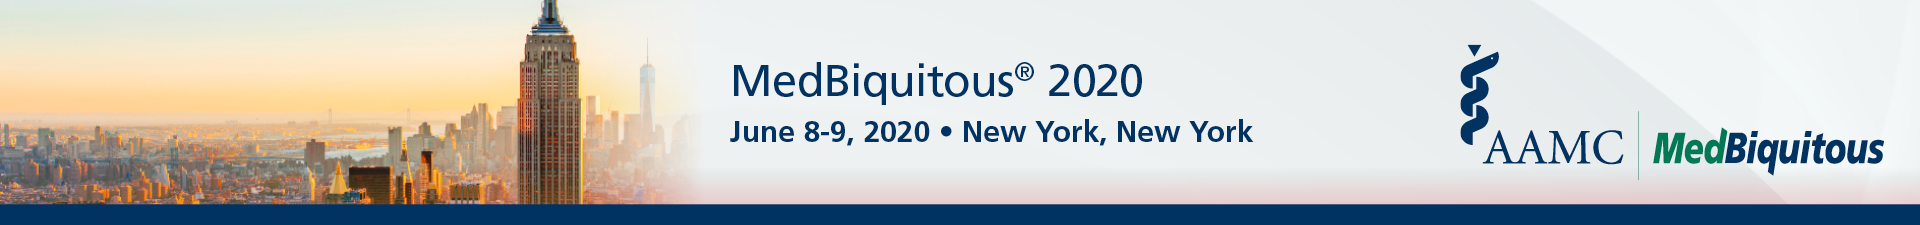 MedBiquitous 2020 Event Banner